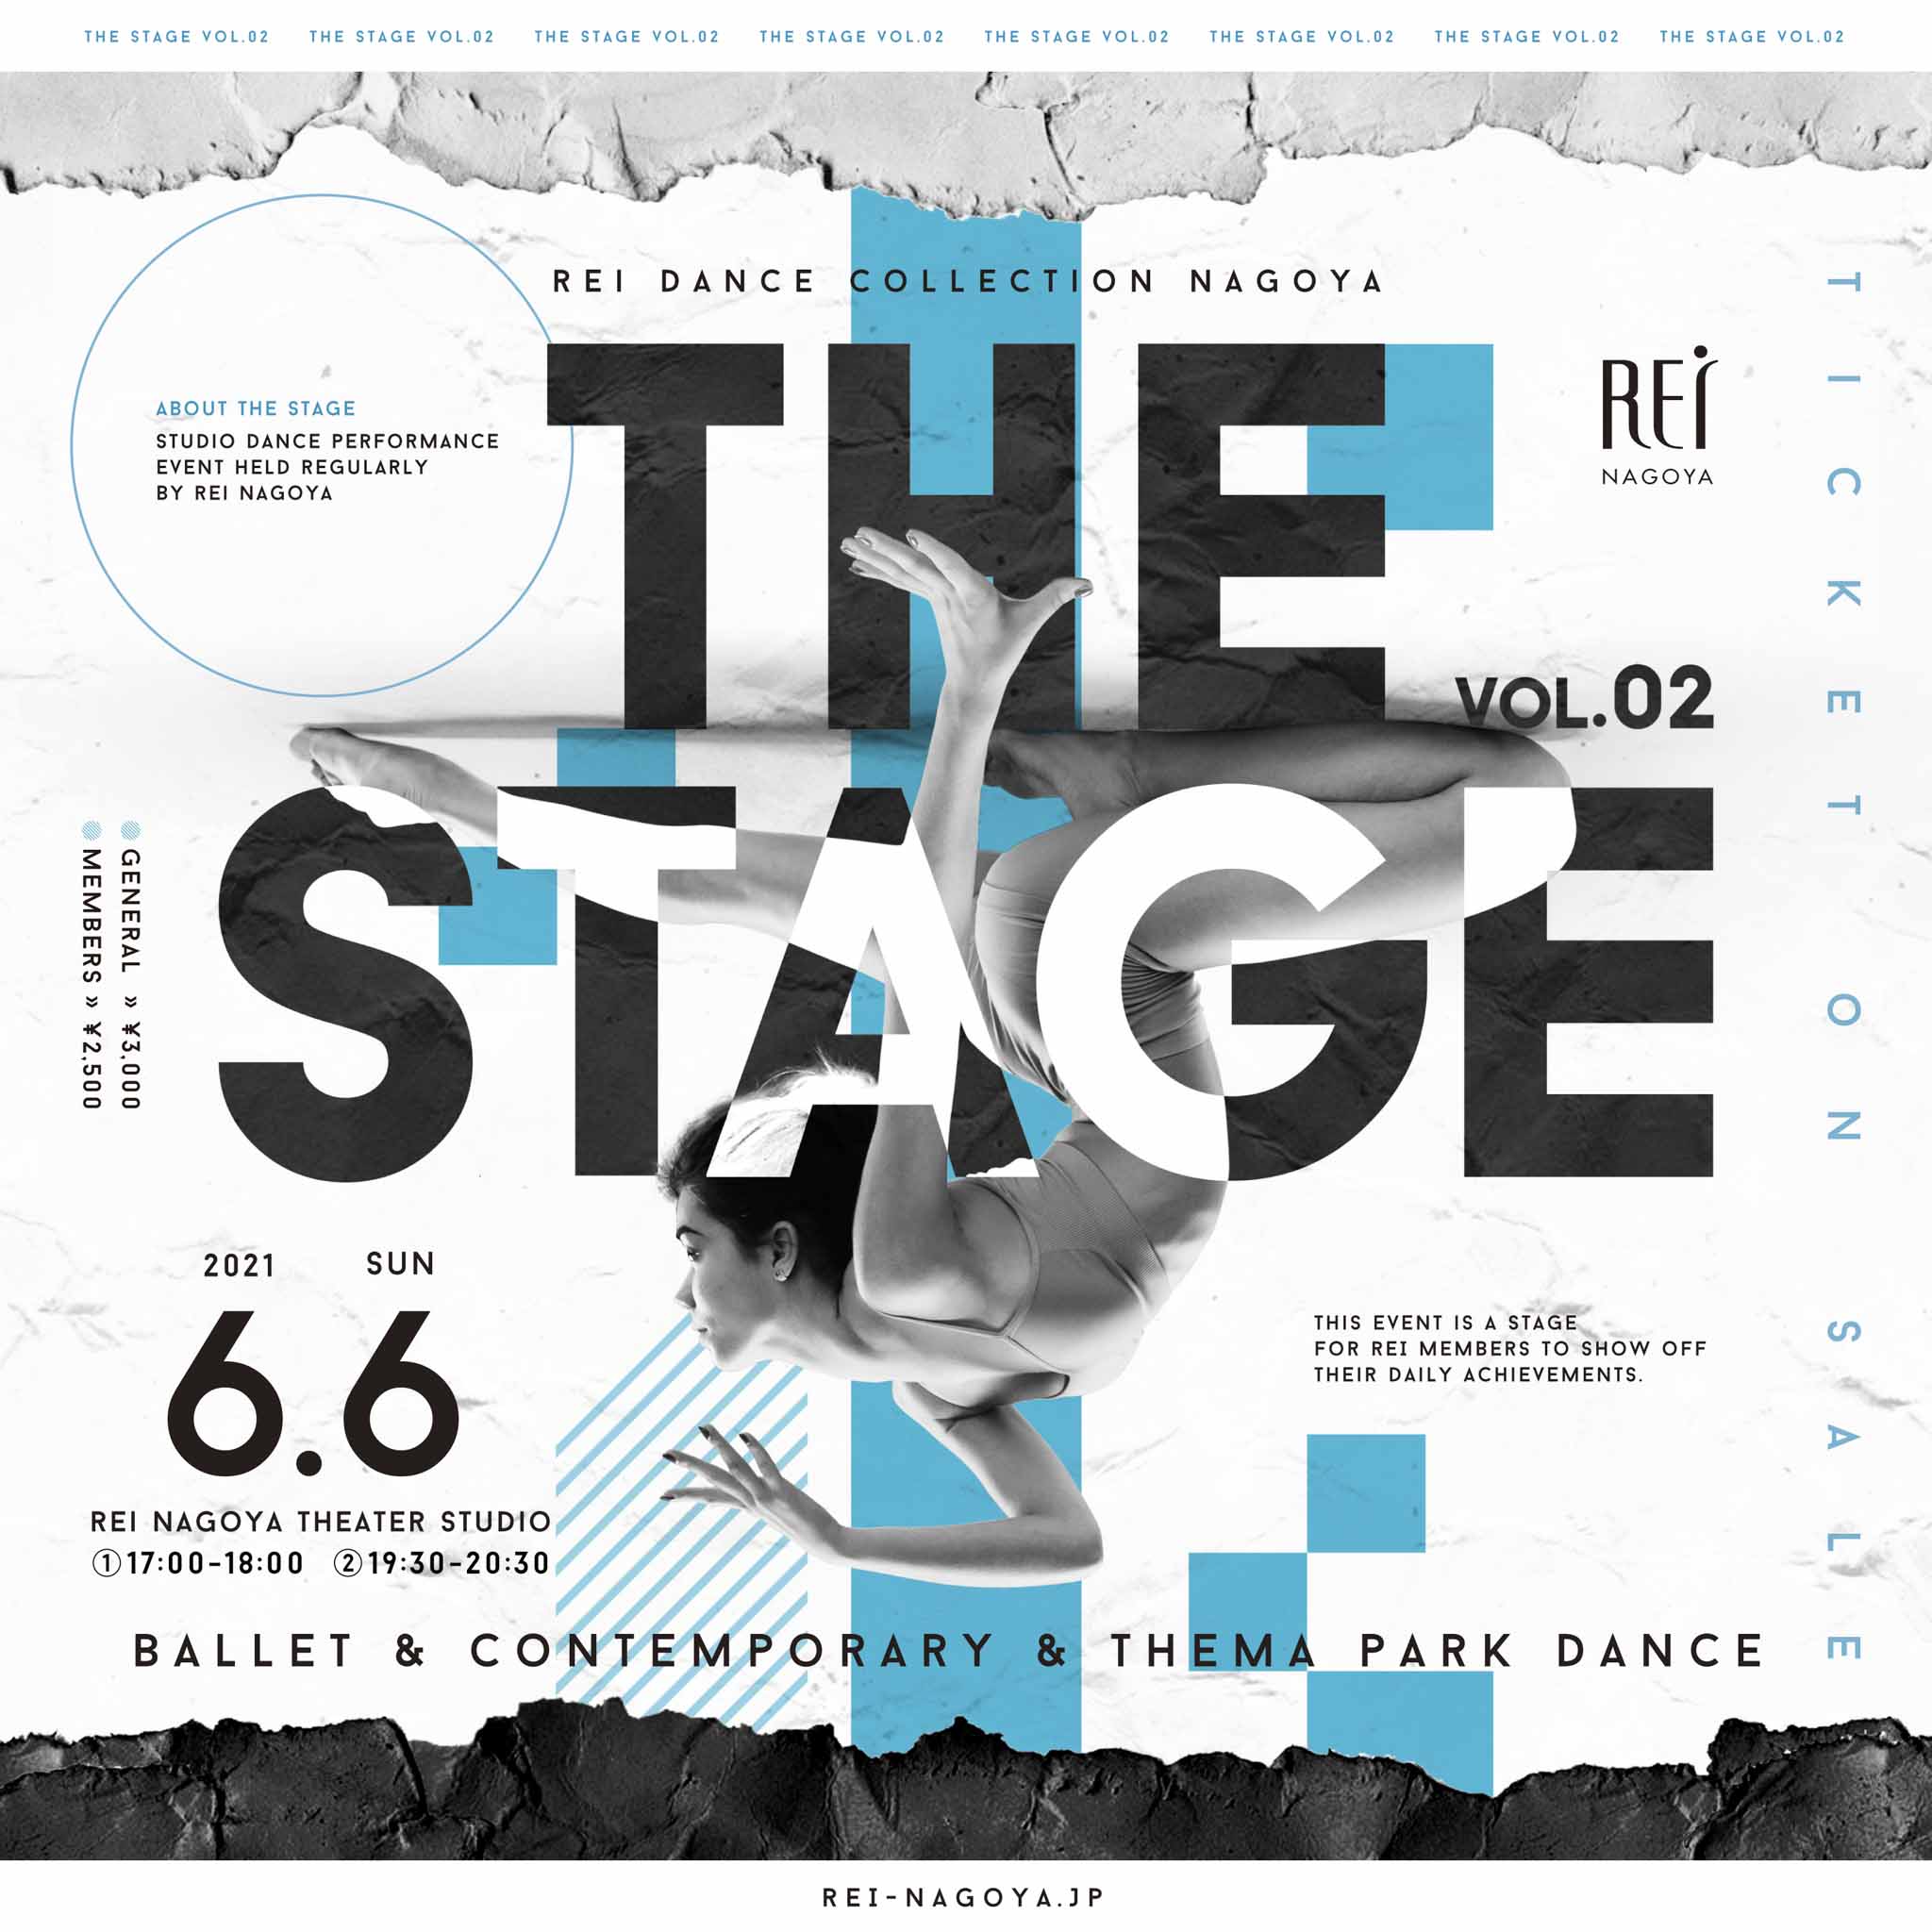 THE STAGE vol.02 ~BALLET & CONTEMPORARY & THEME PARK DANCE~